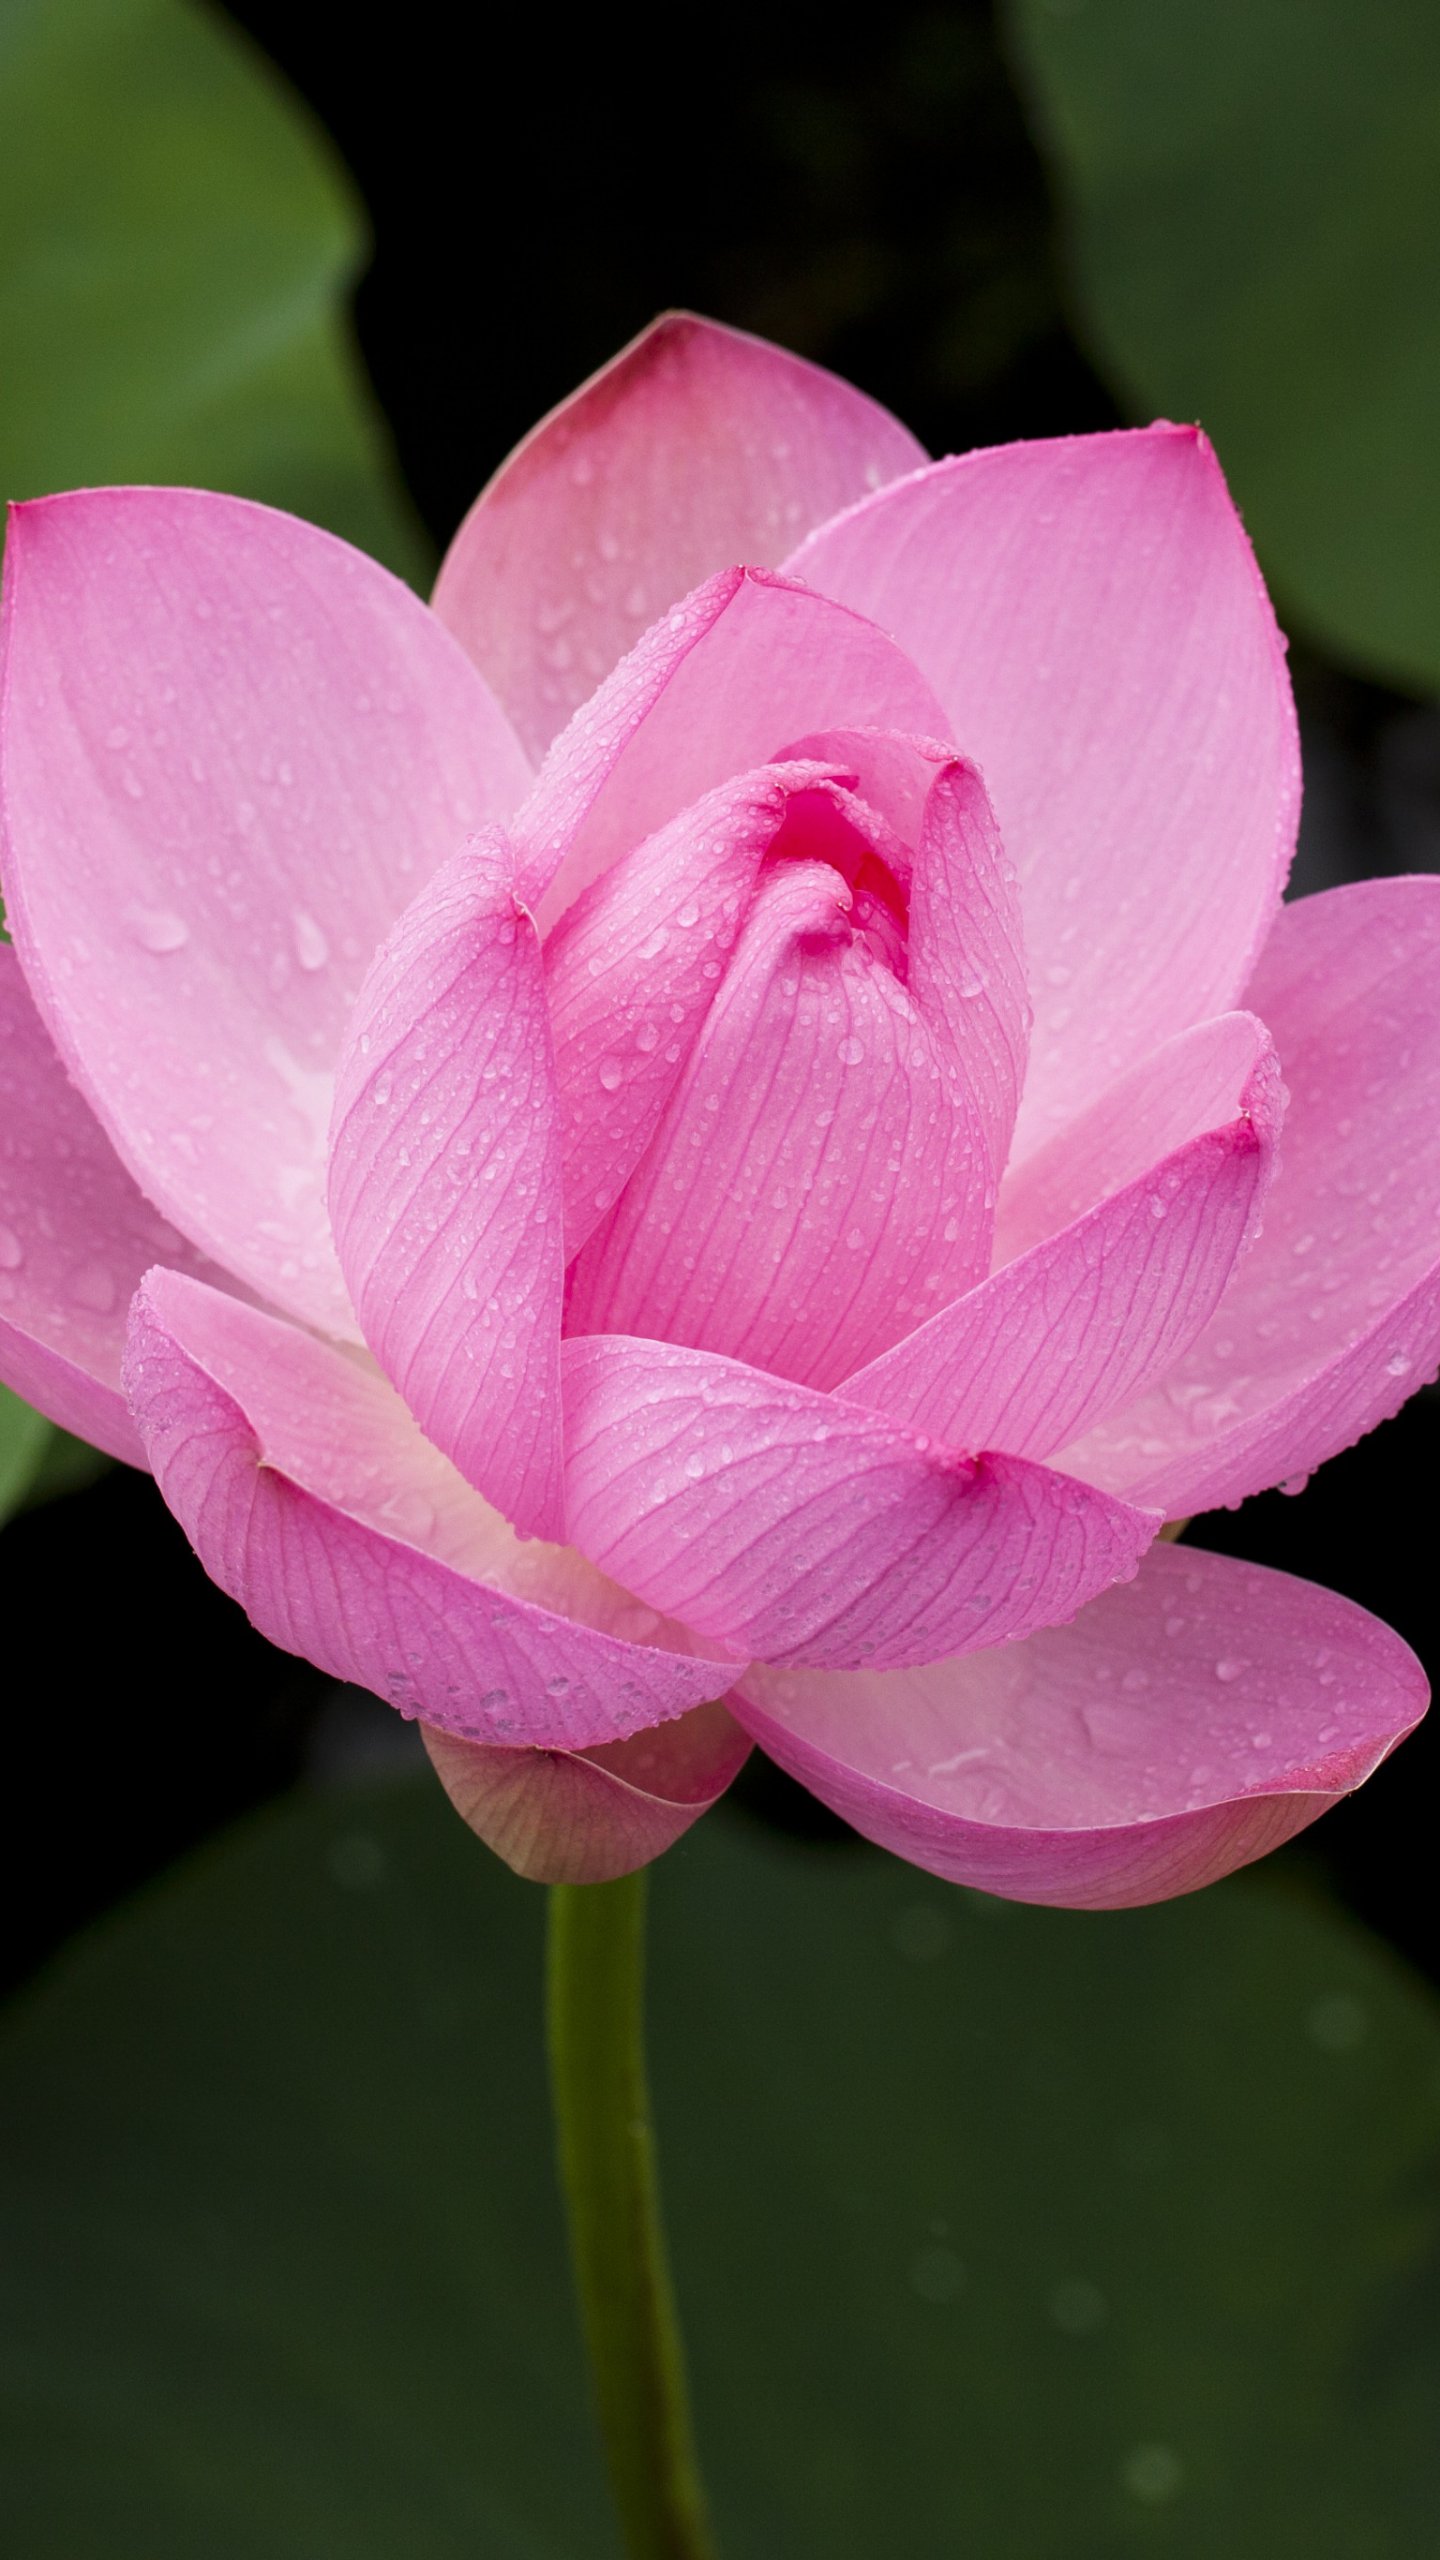 Pink Lotus Flower Wallpaper - iPhone, Android & Desktop Backgrounds